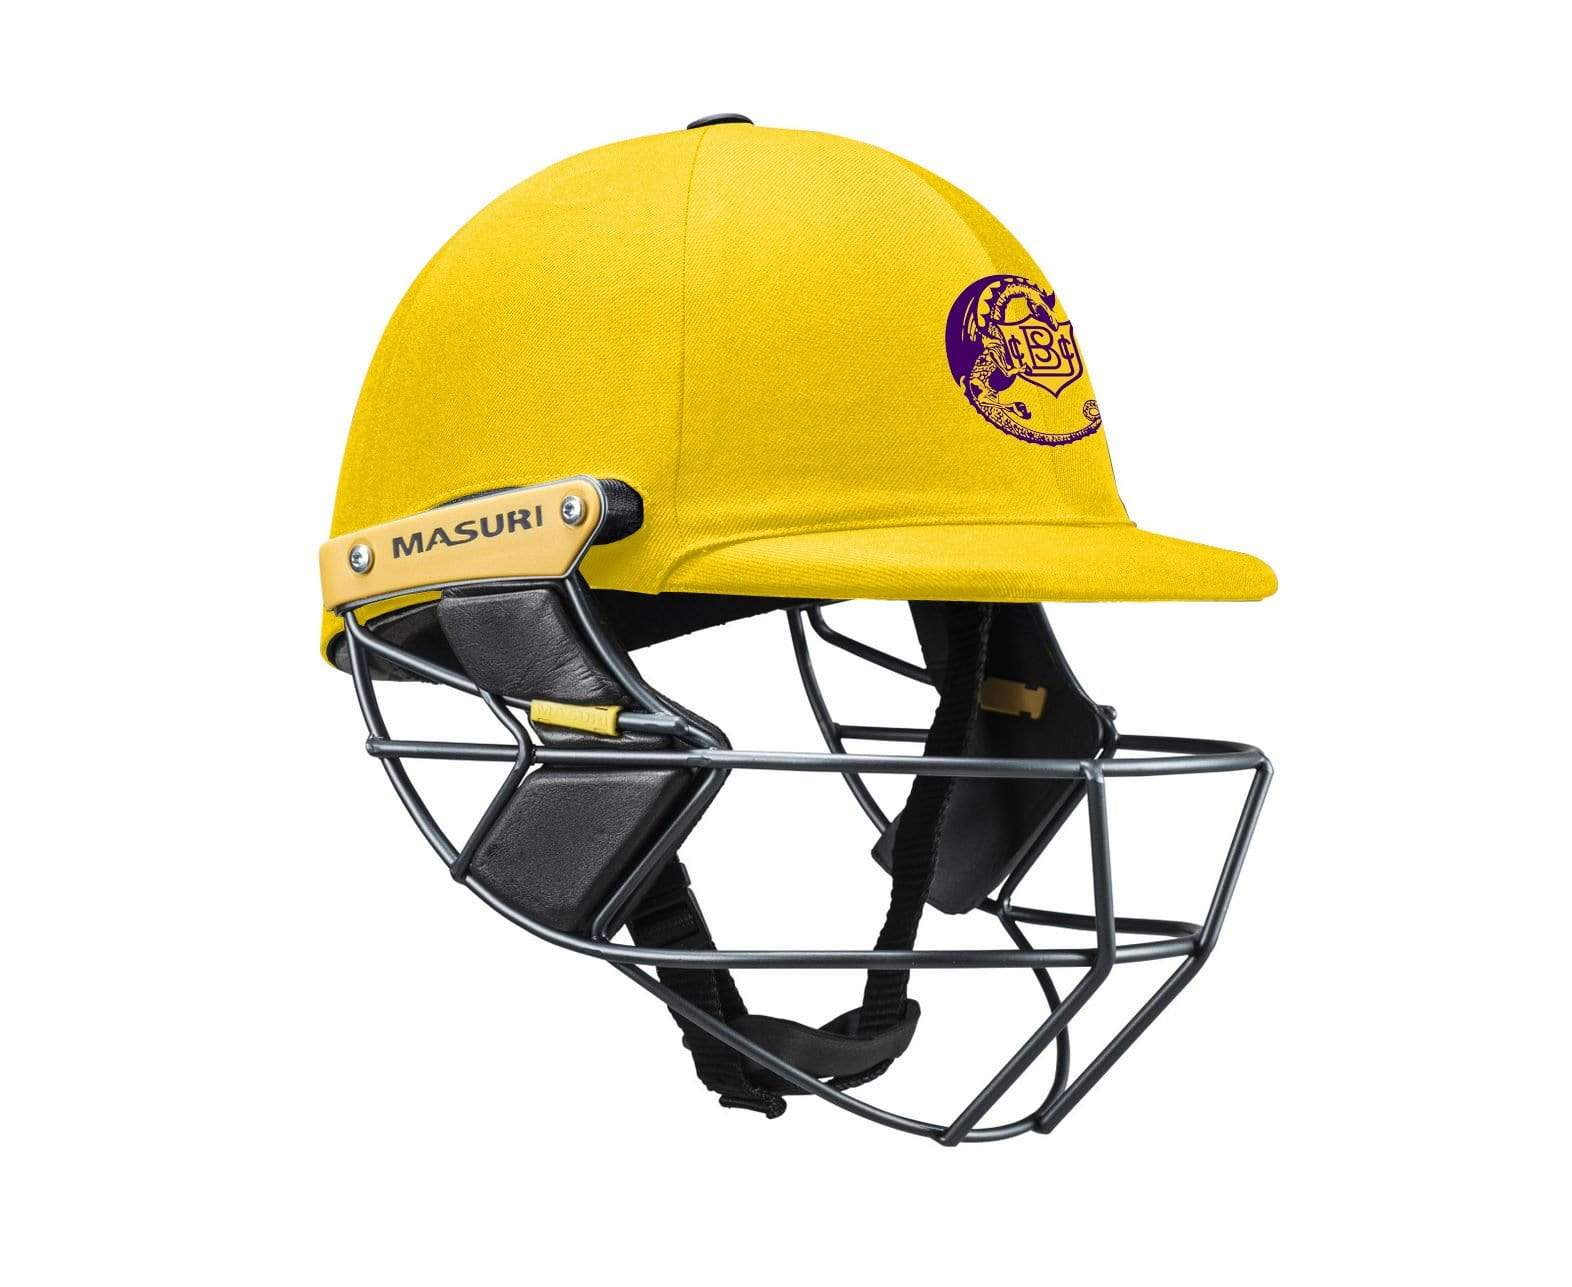 Masuri Club Helmet Barkly Street Uniting Cricket Club Helmet